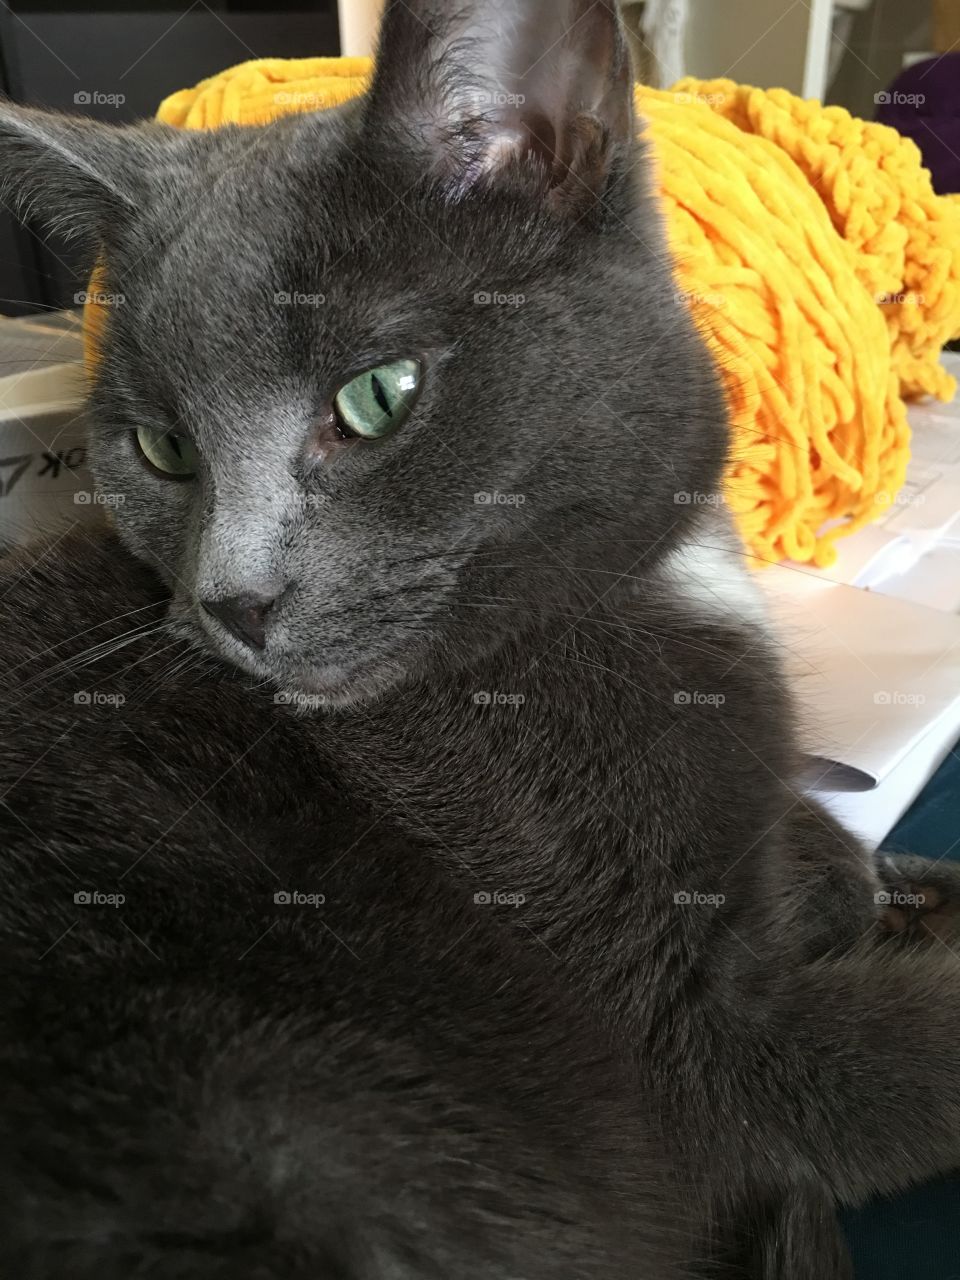 Cat laying by yarn